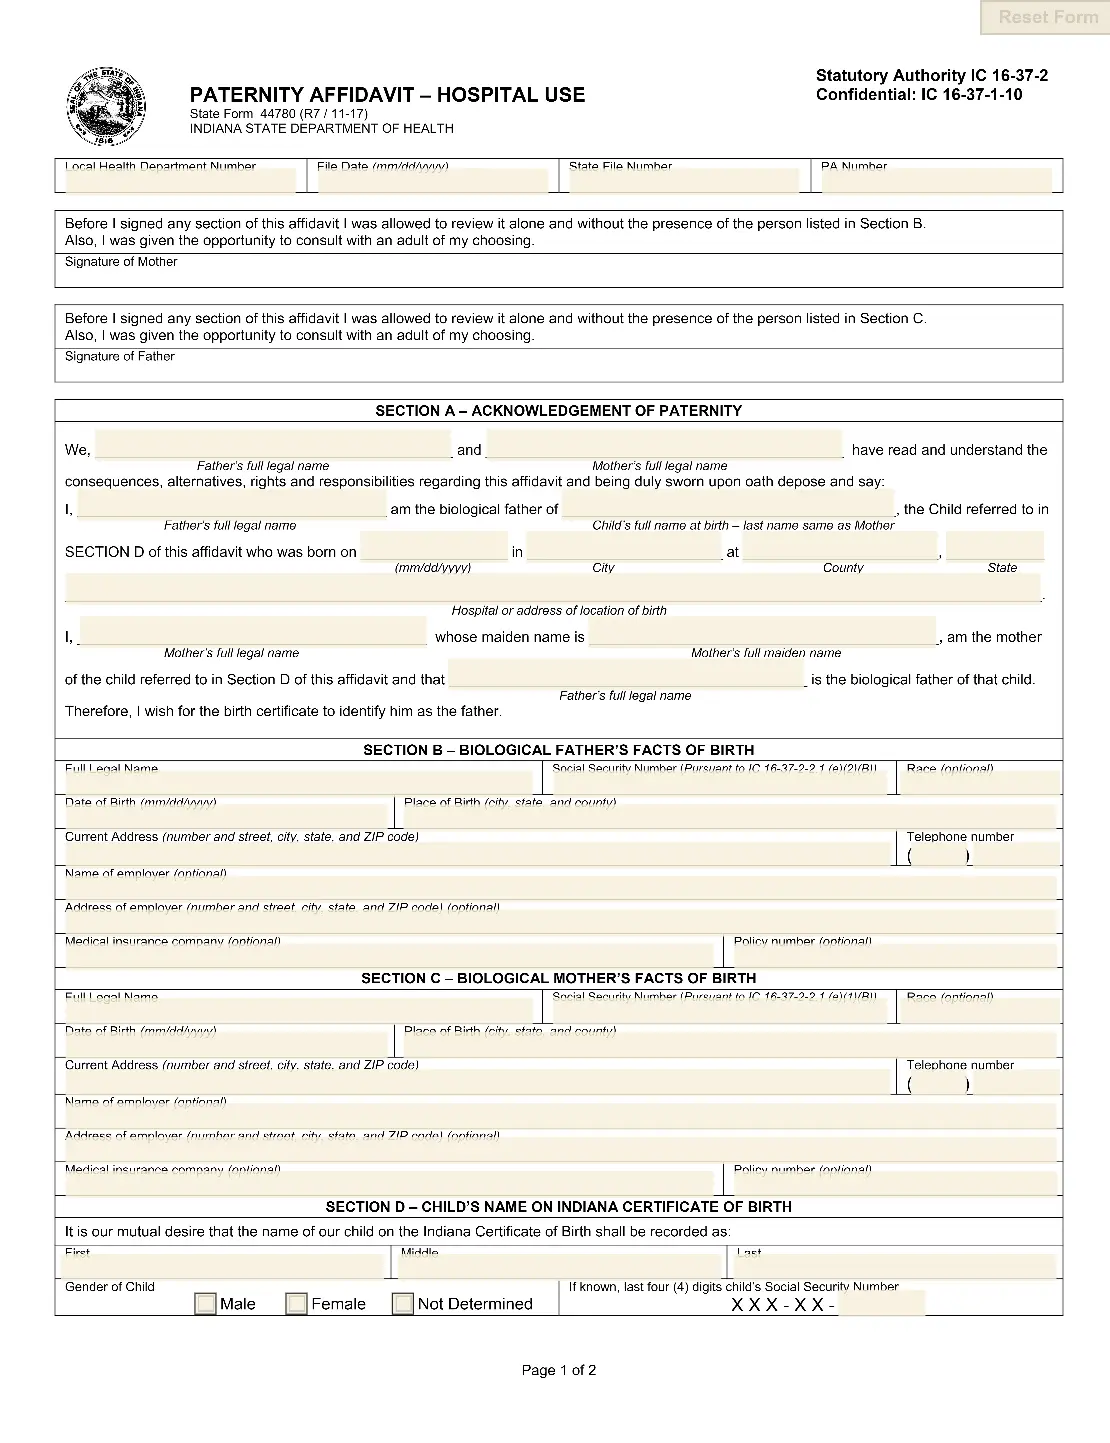 indiana paternity affidavit (form 44780)